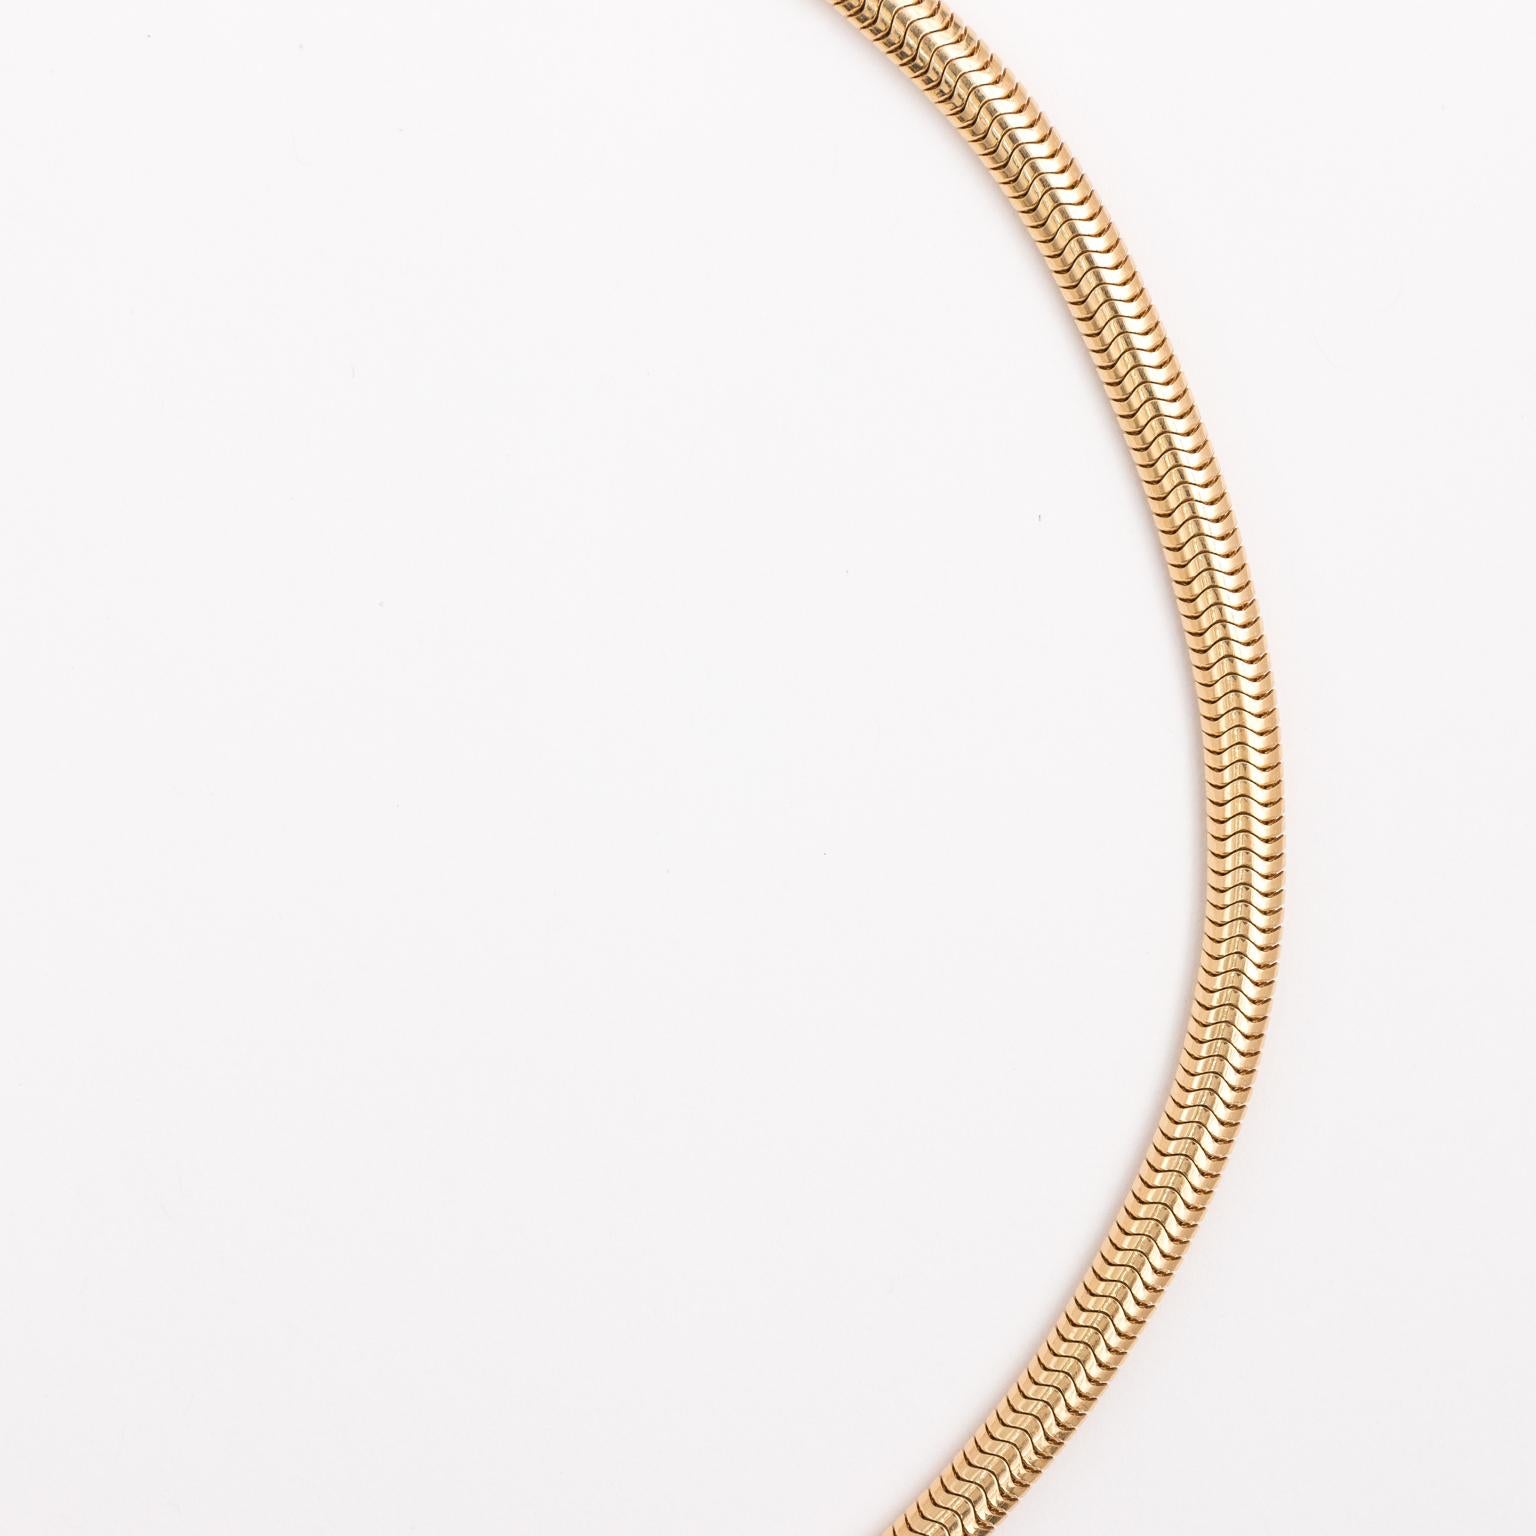 Circa 1970 Tiffany & Co. Designer 14k Yellow Gold Ladies Snake Chain Necklace, hallmarked 